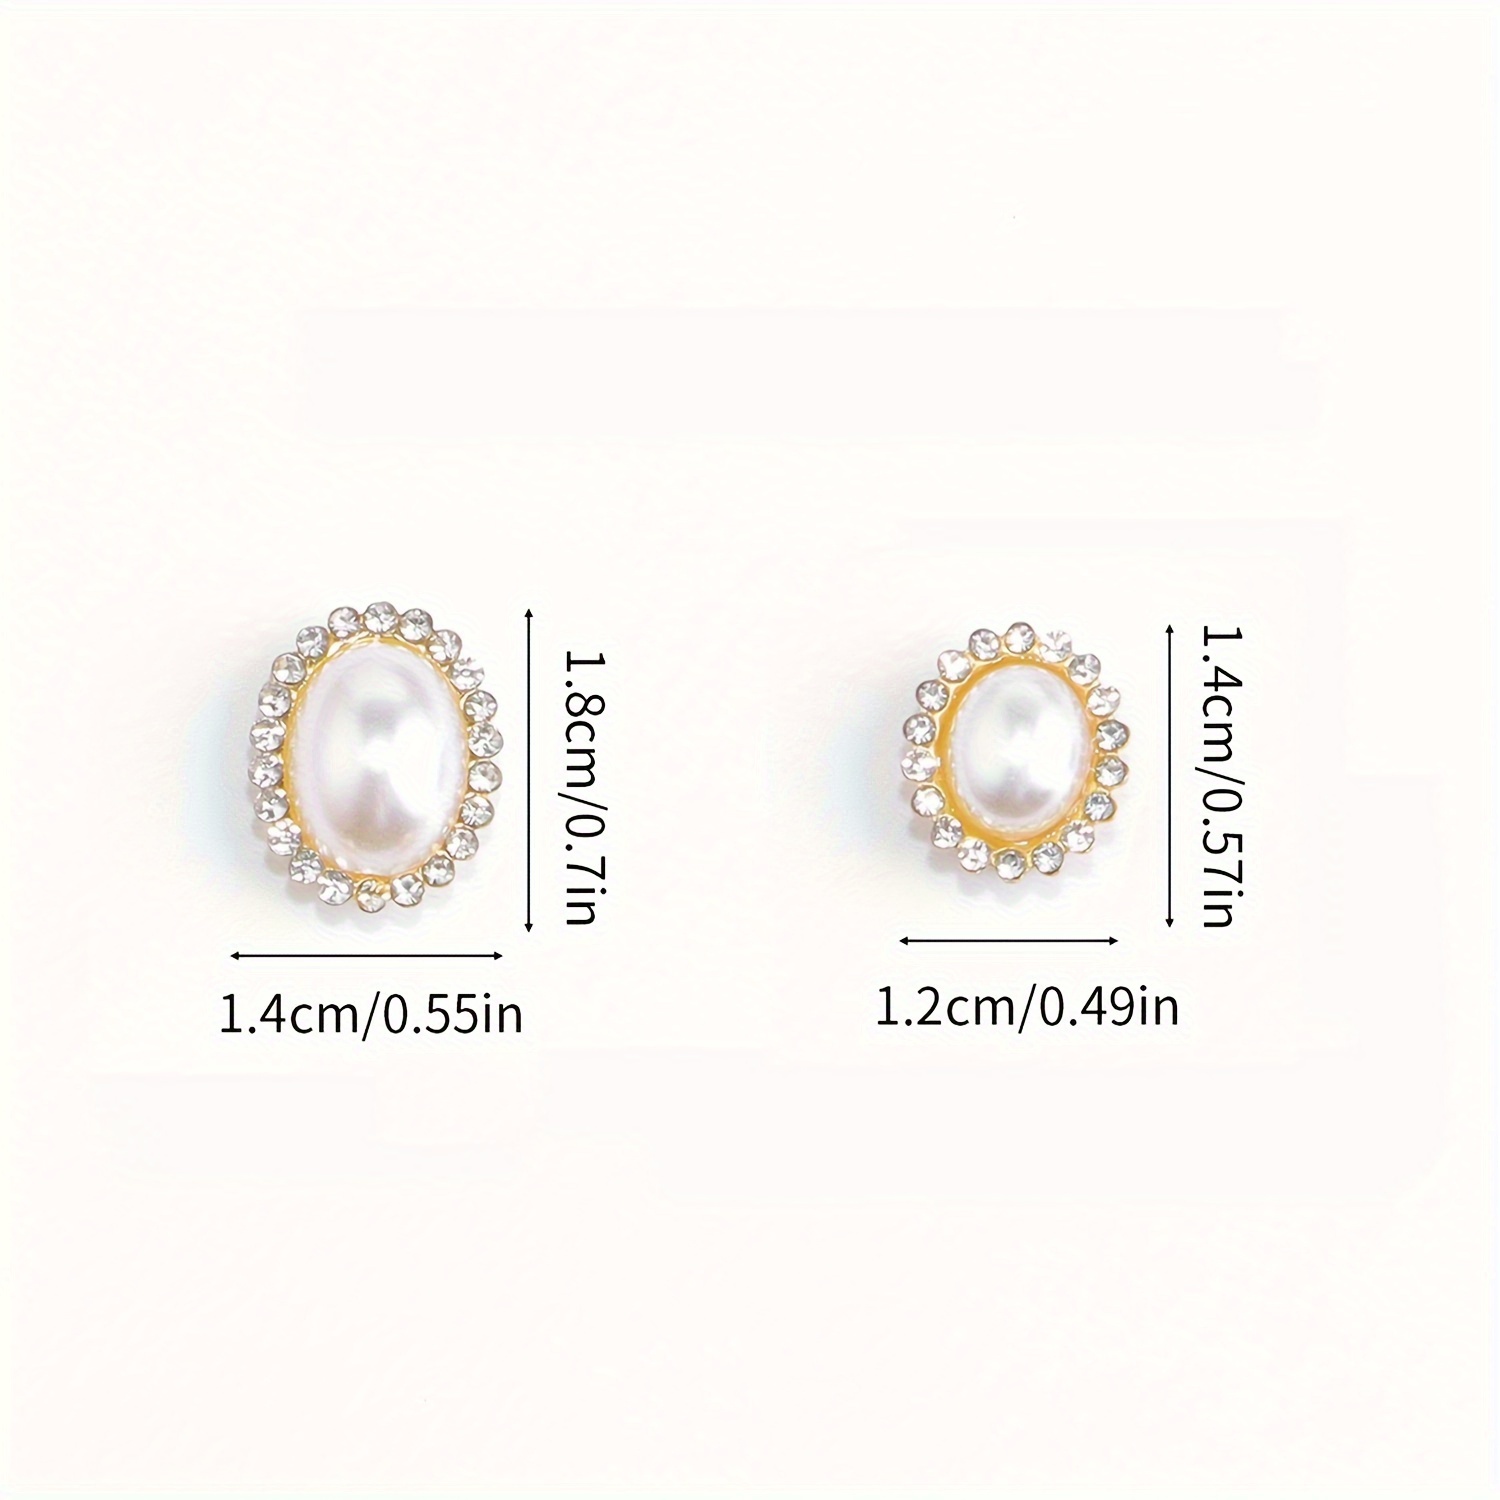 50pcs Flower Pearl Rhinestones Gold Base Shiny Crystals Stones Sew